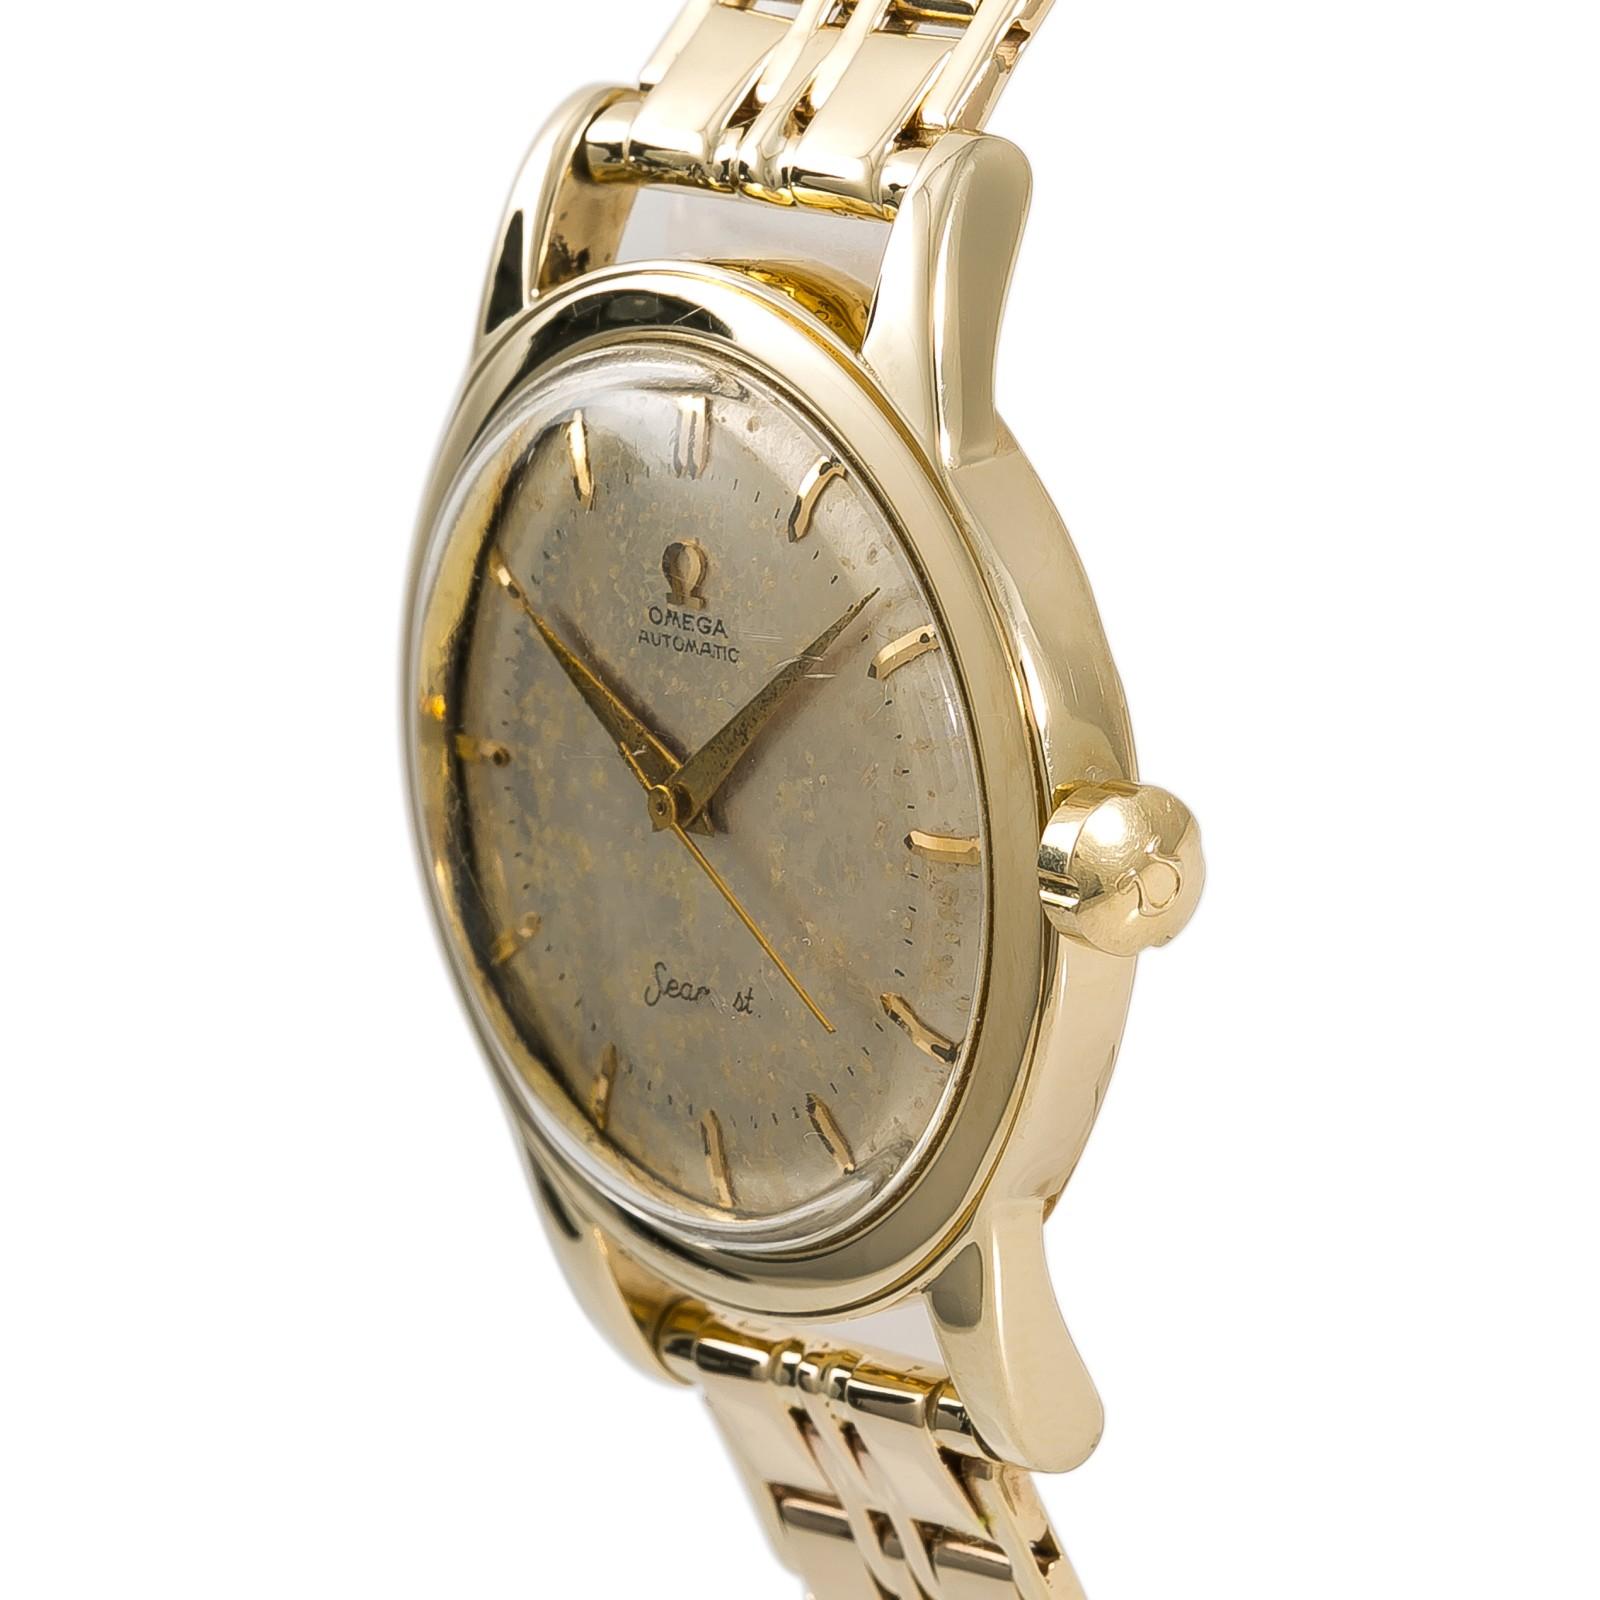 Contemporary Omega Seamaster Automatic Men’s Vintage Watch 14 Karat Yellow Gold 74 Grams